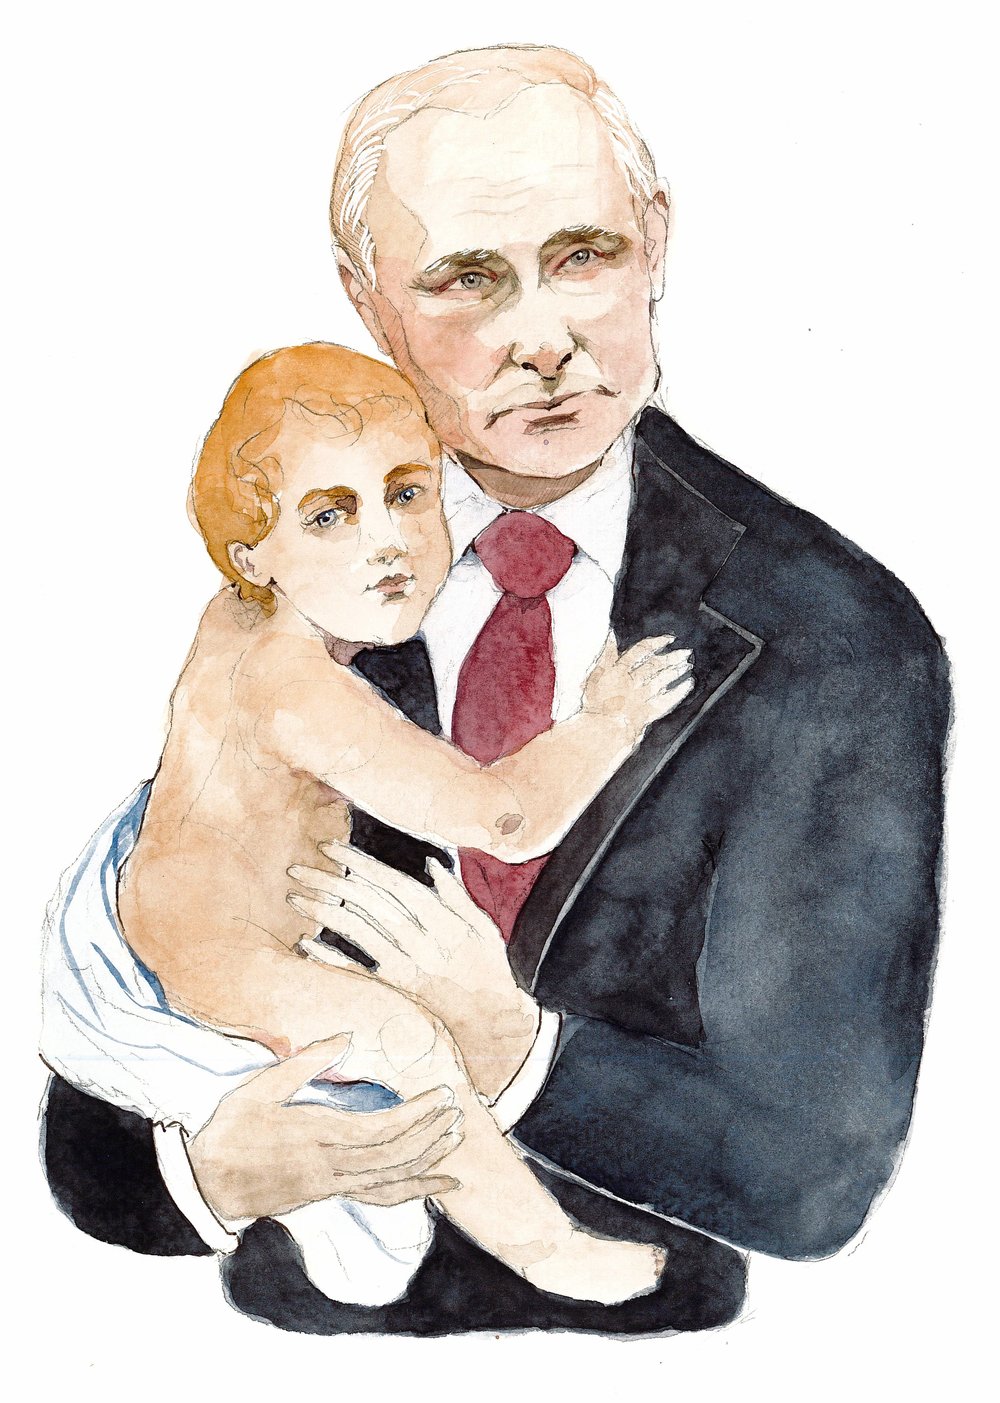 Vladimir Putin holding a baby.